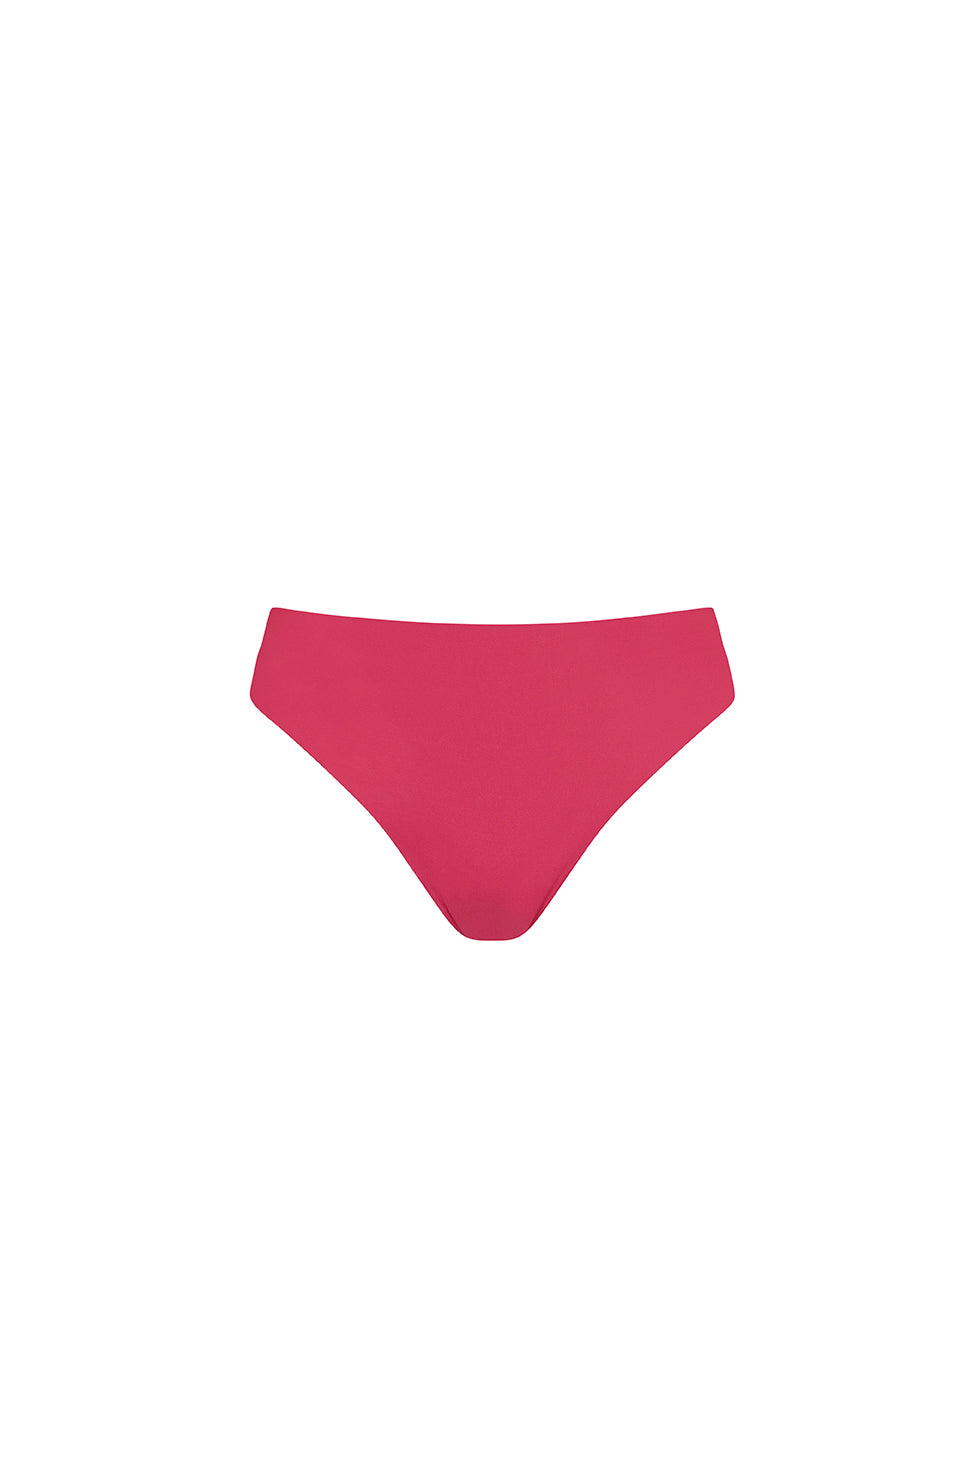 Amoena Cozumel Reversible Swimwear Bottom